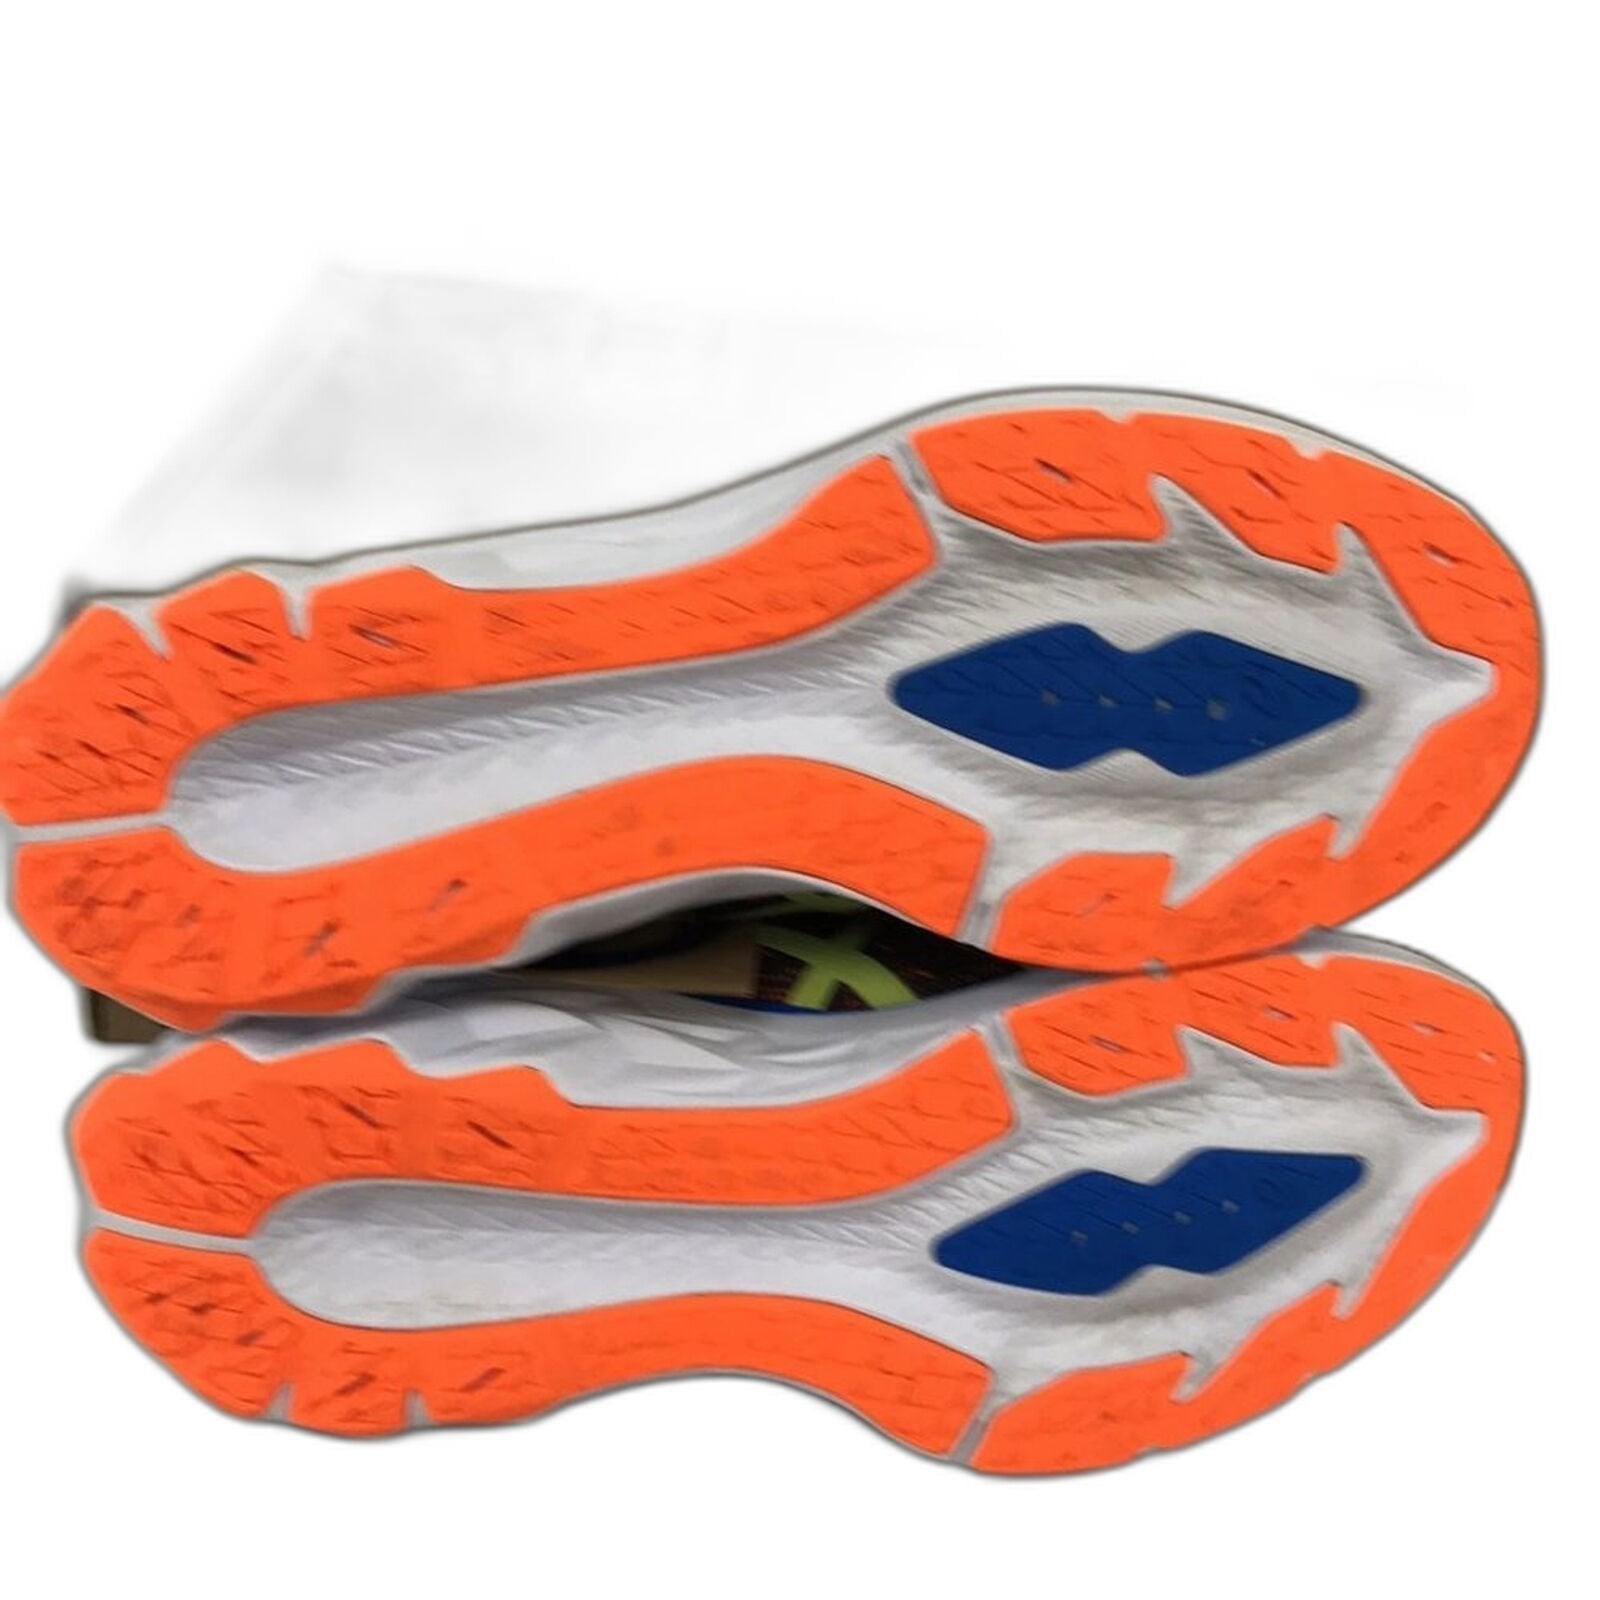 ASICS Mens NOVABLAST 2 Running Shoes Black Shocking Orange 11 US